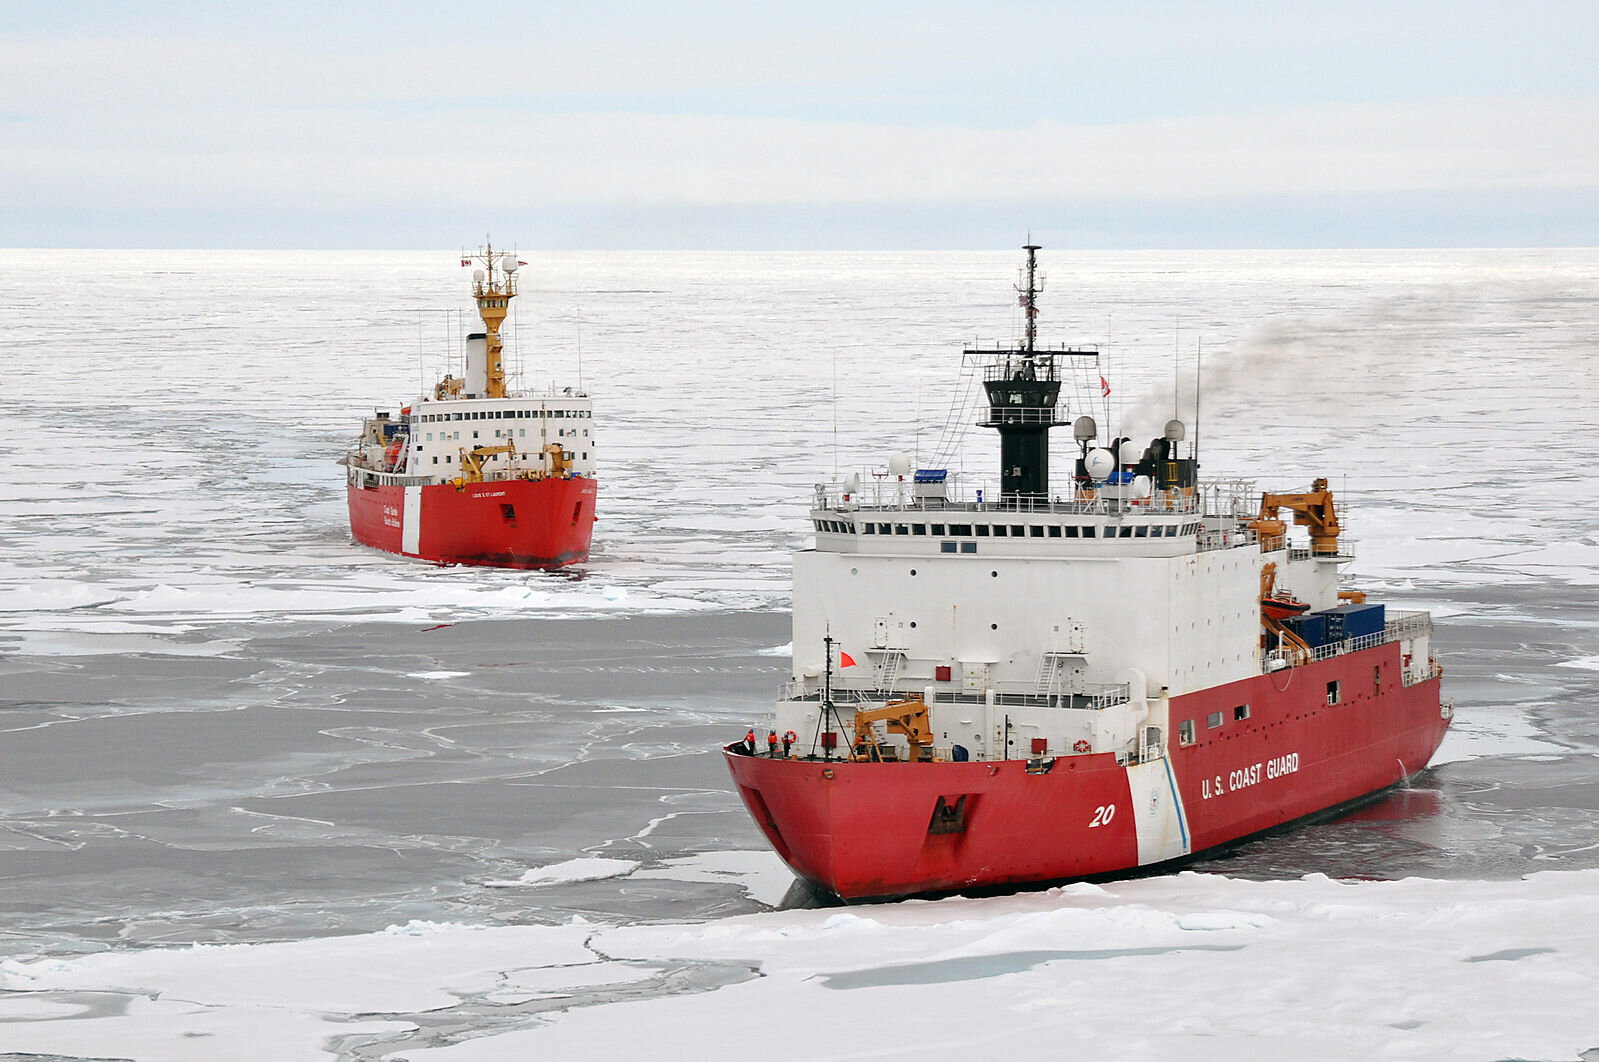 Seattle-based icebreaker will make Northwest Passage transit in new Arctic  mission